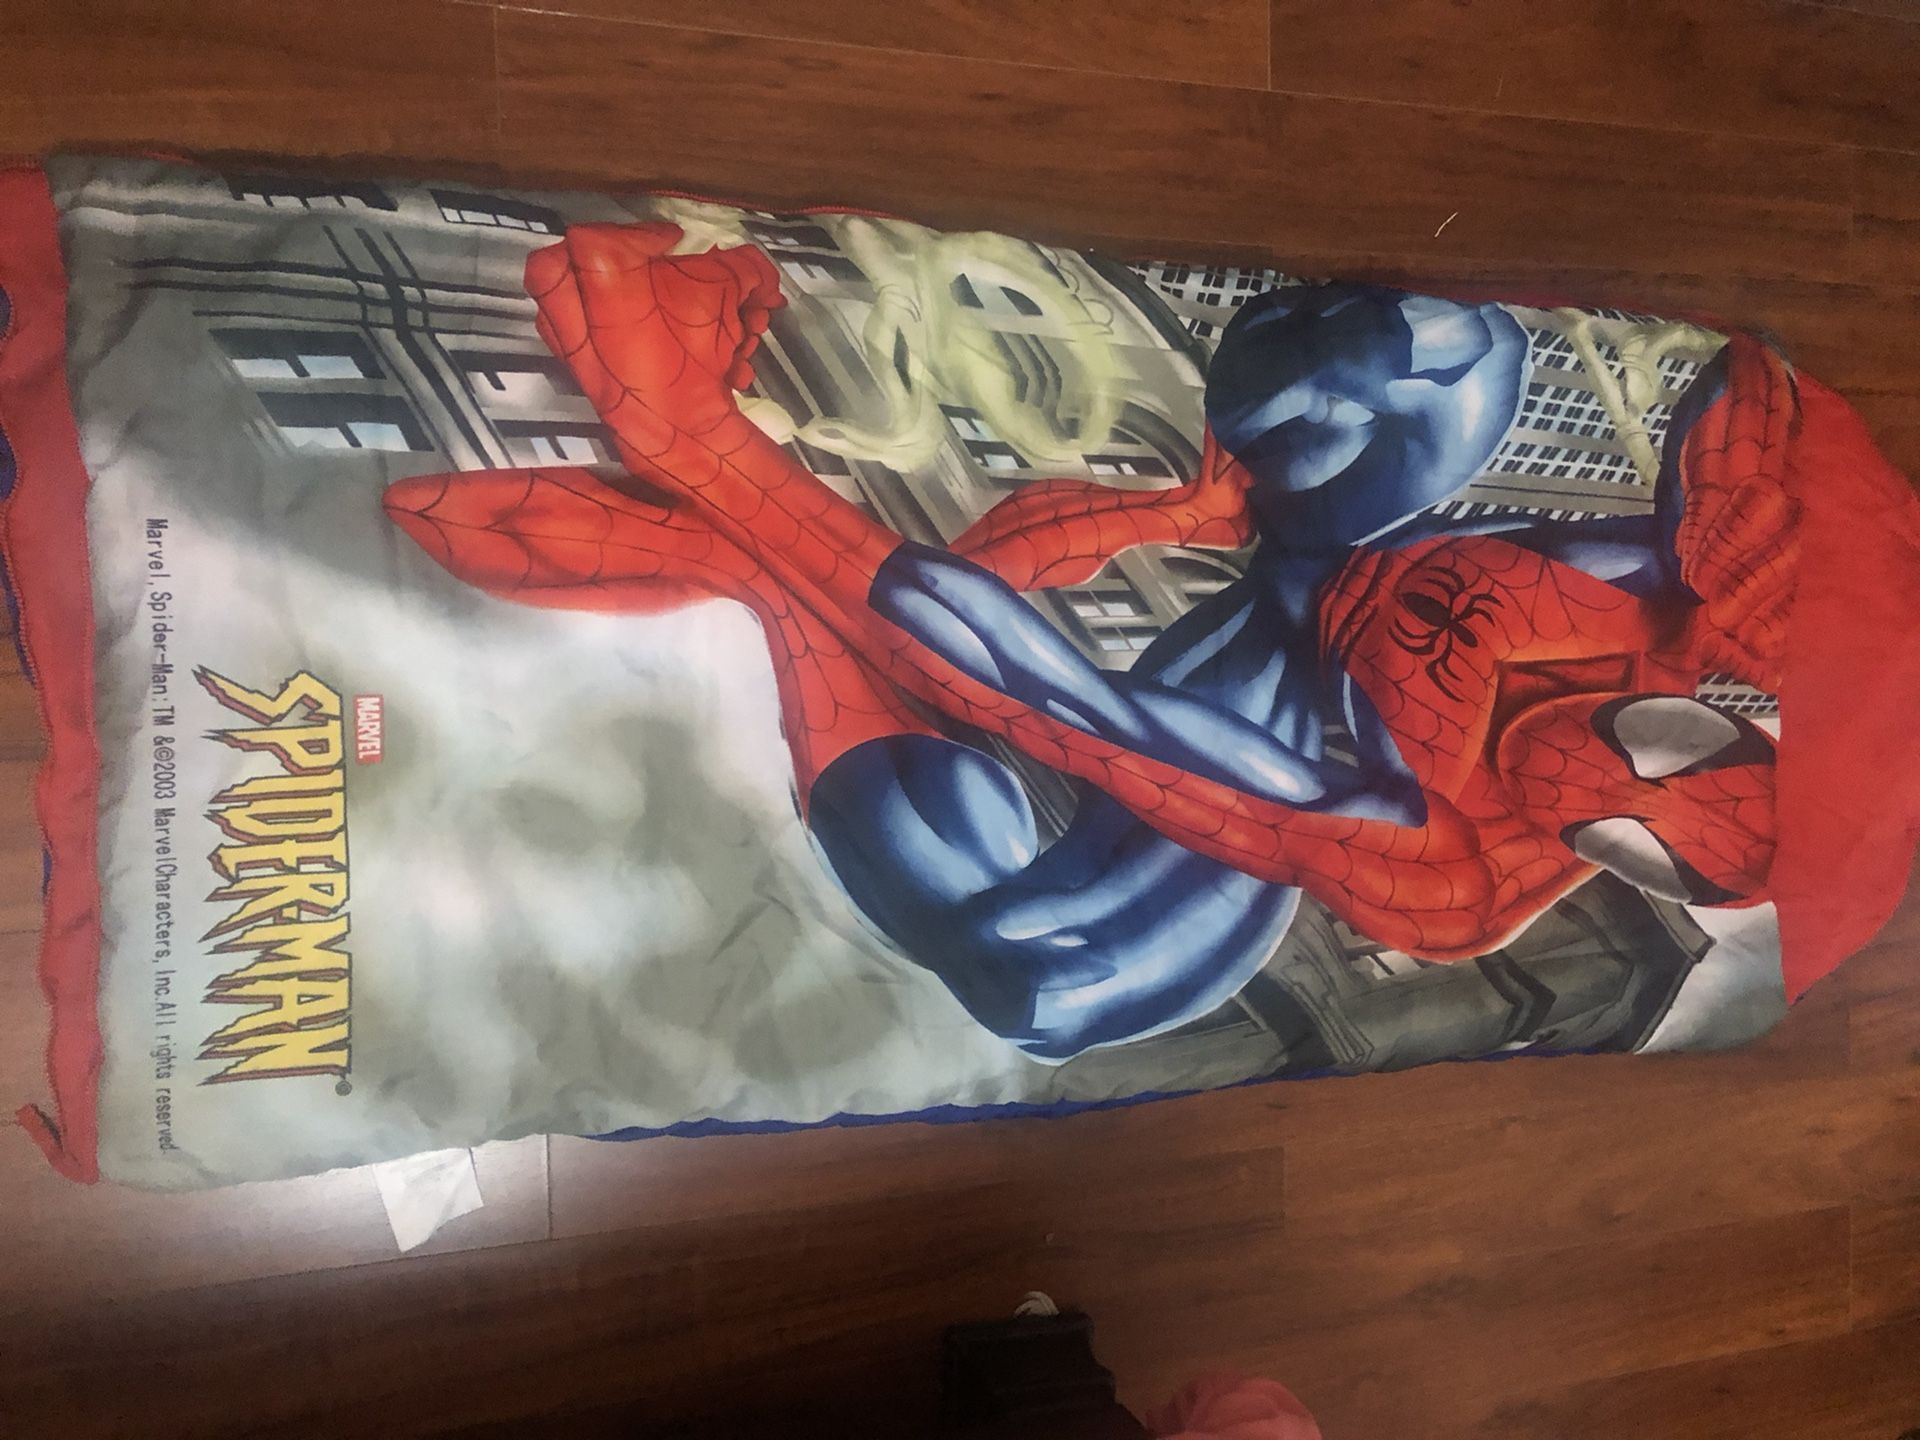 Sleeping Bag Of Spiderman With Bag